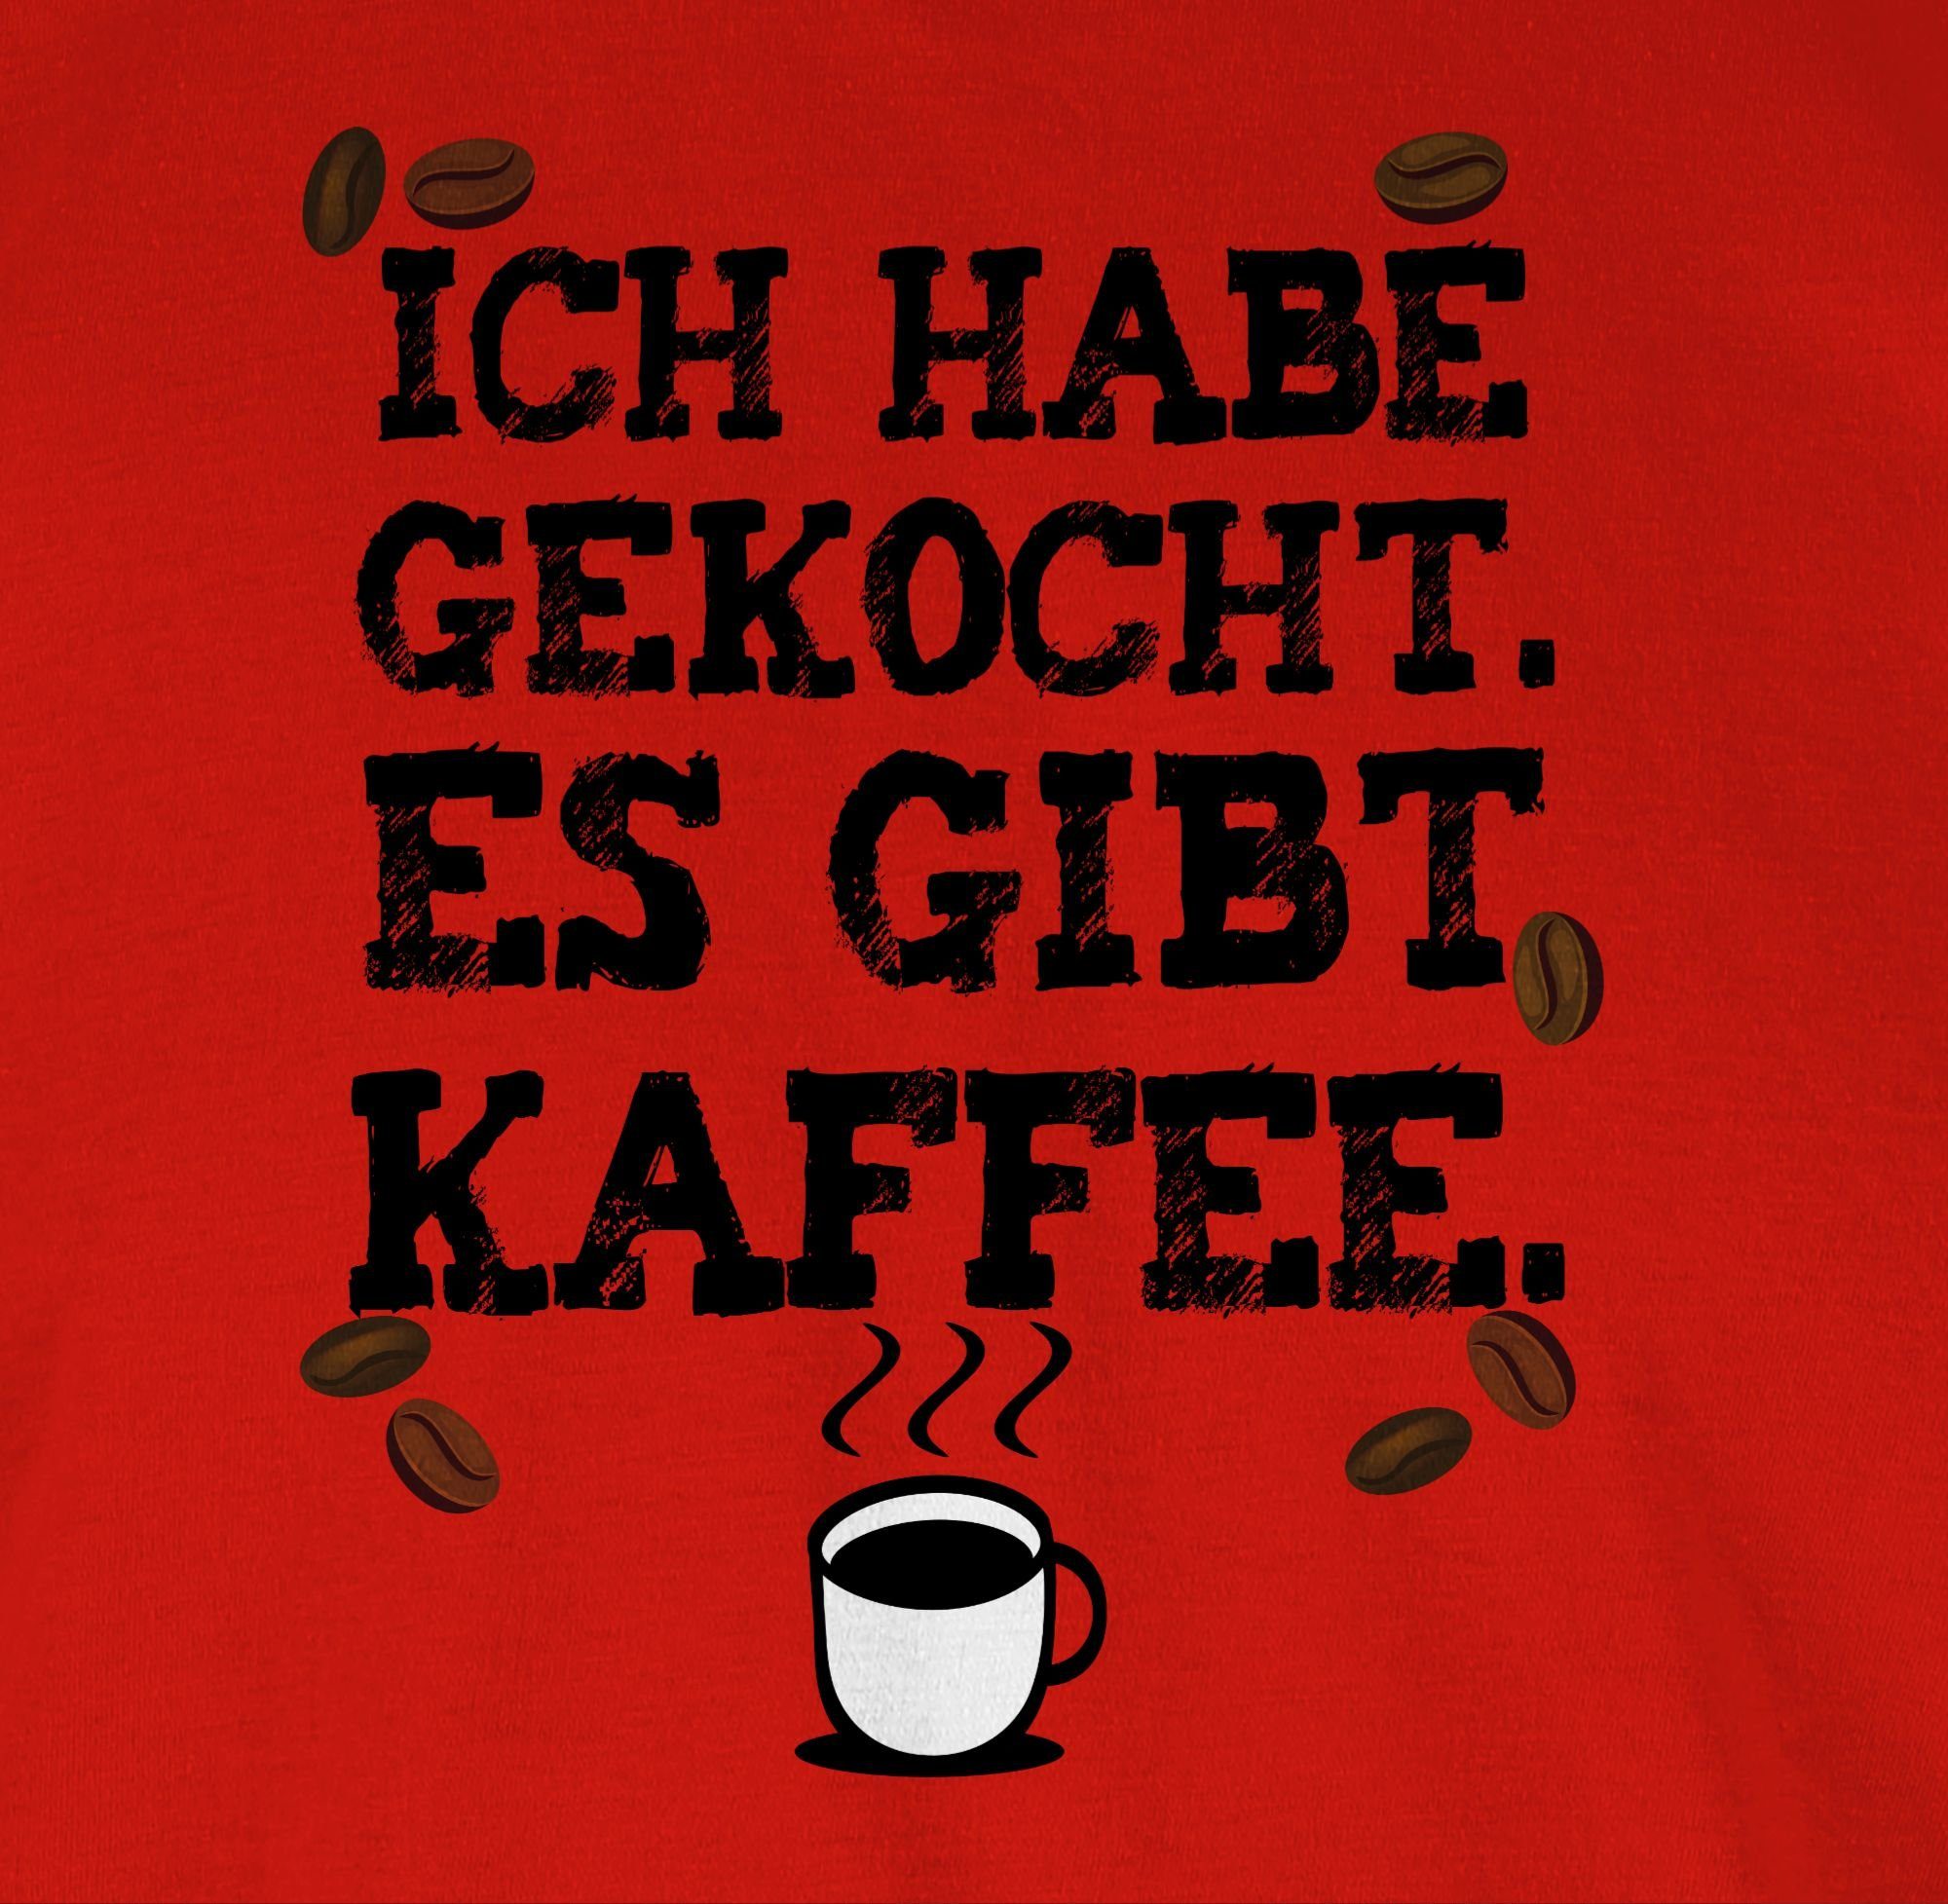 Shirtracer T-Shirt Ich habe Kaffee gekocht. Küche Es Kaffeejunkies Gesc - gibt 01 Kaffeeliebhaber Rot